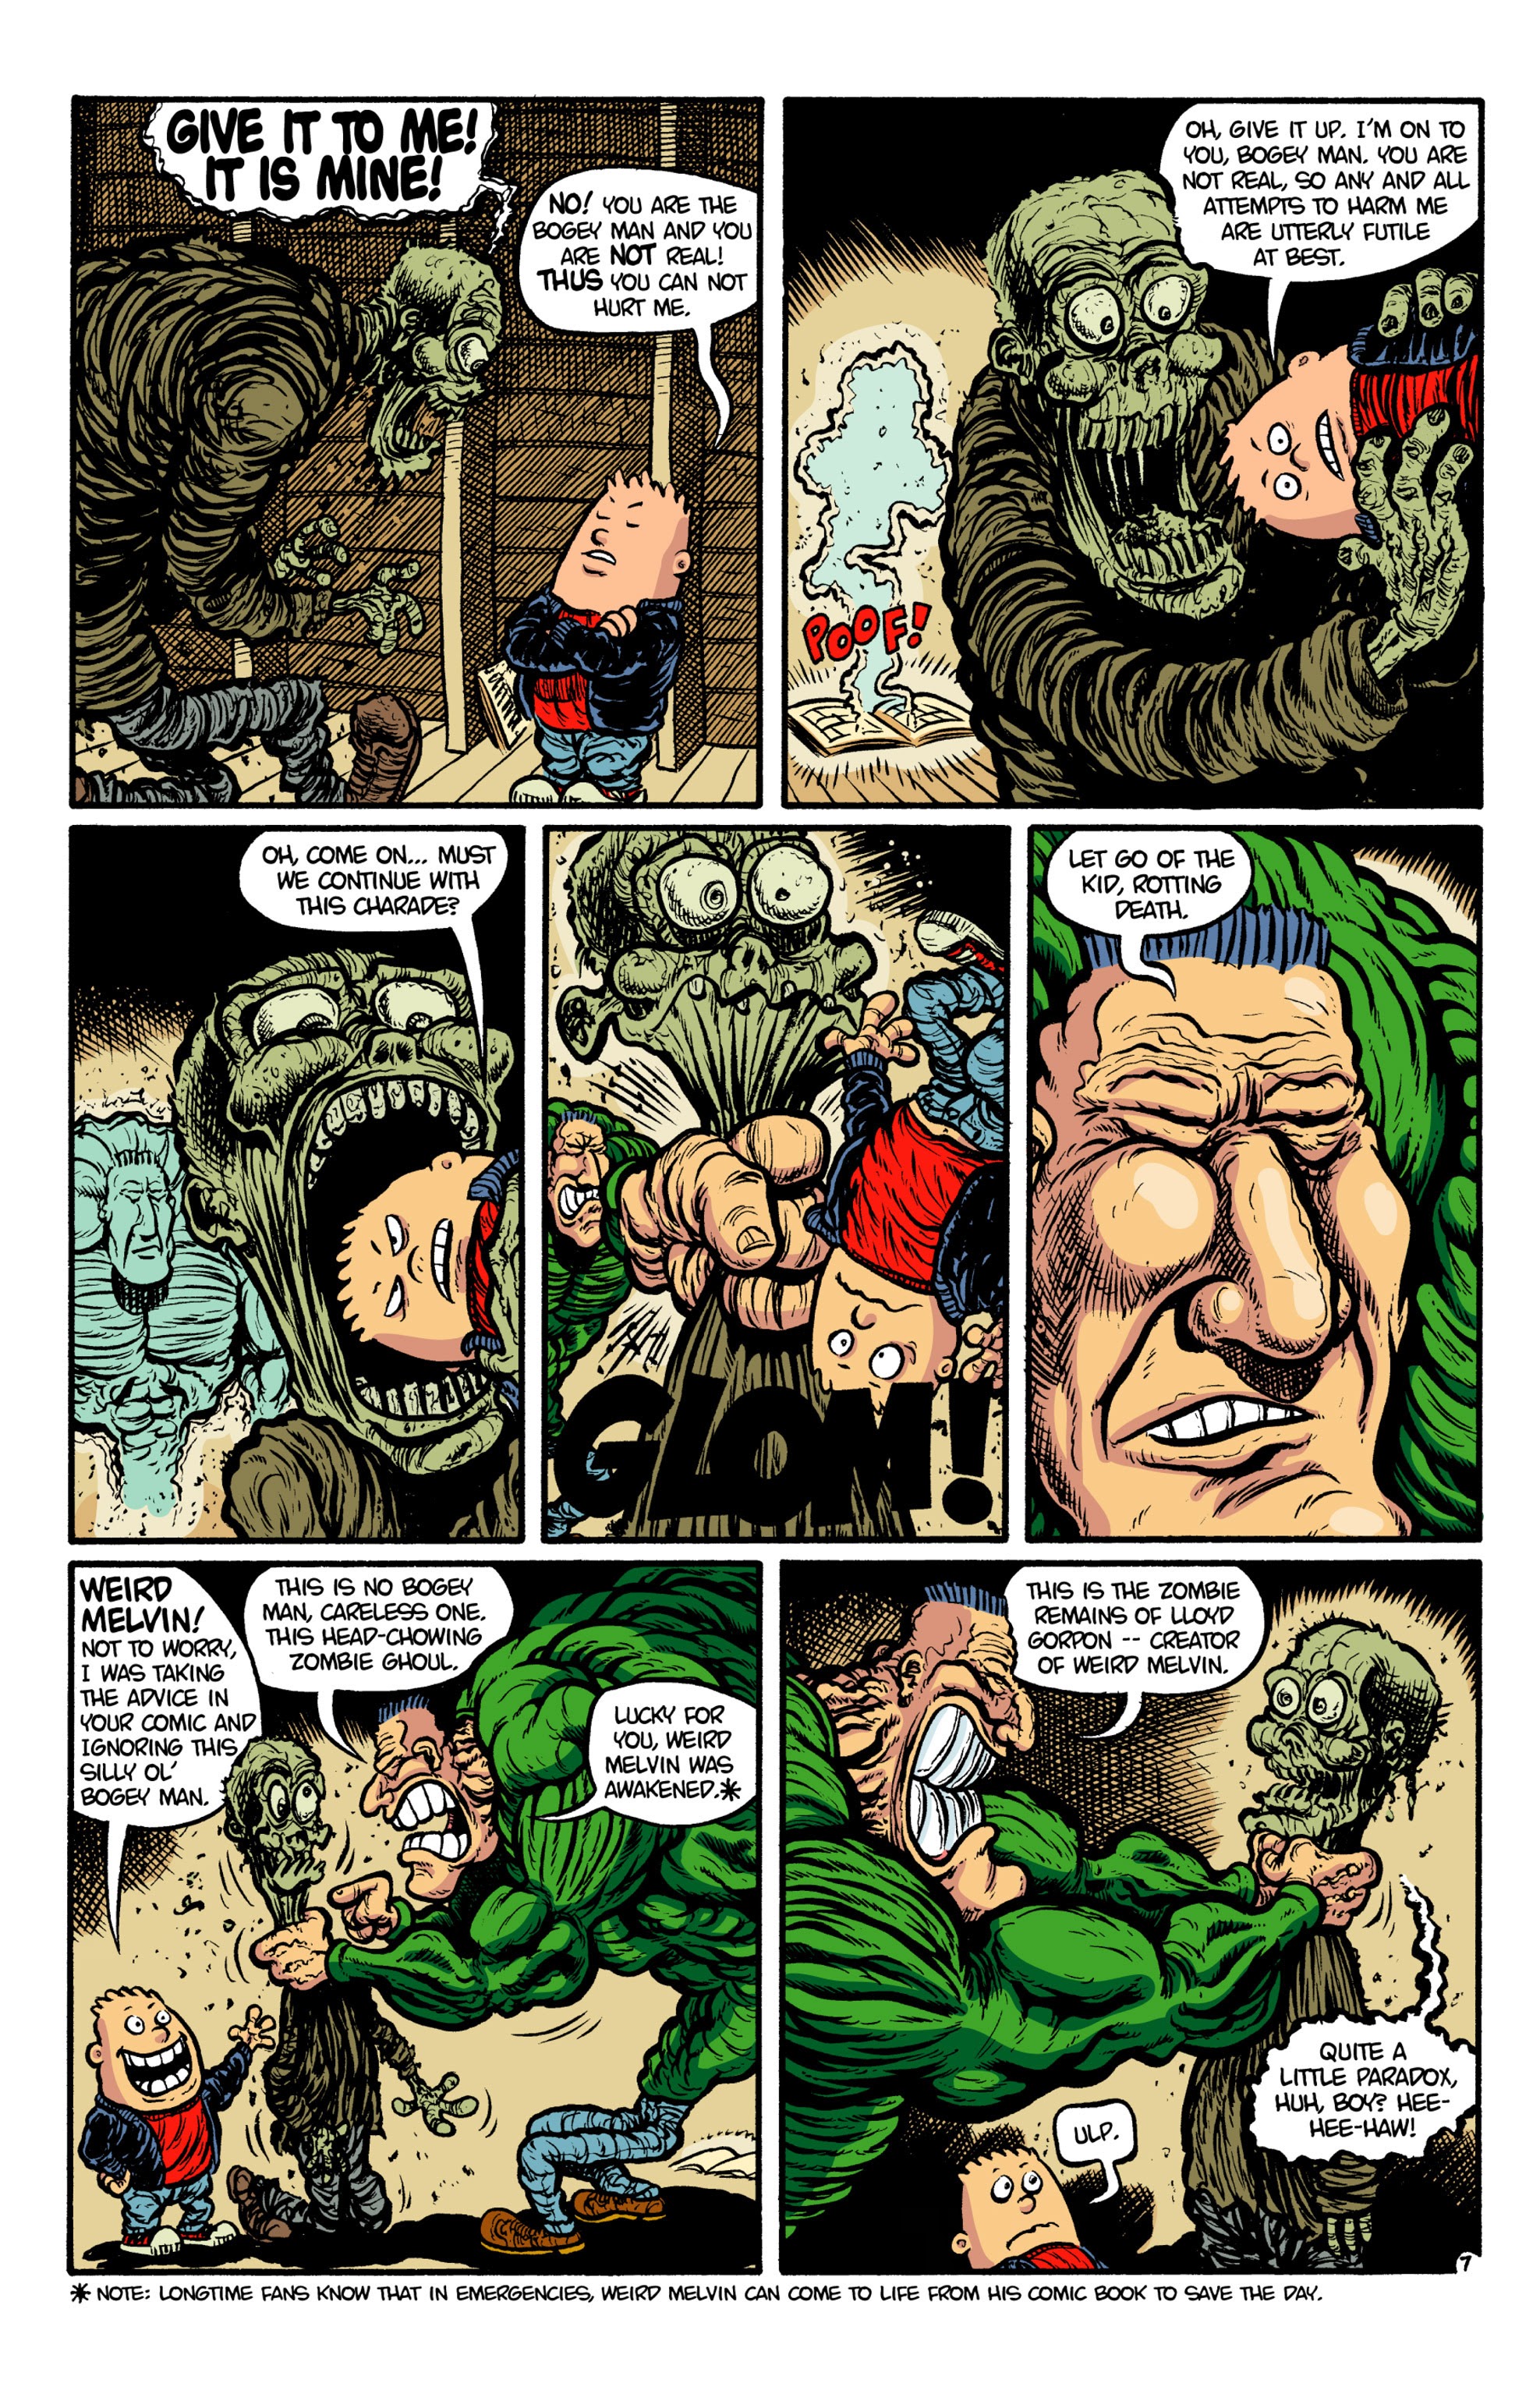 Read online Weird Melvin comic -  Issue #5 - 20